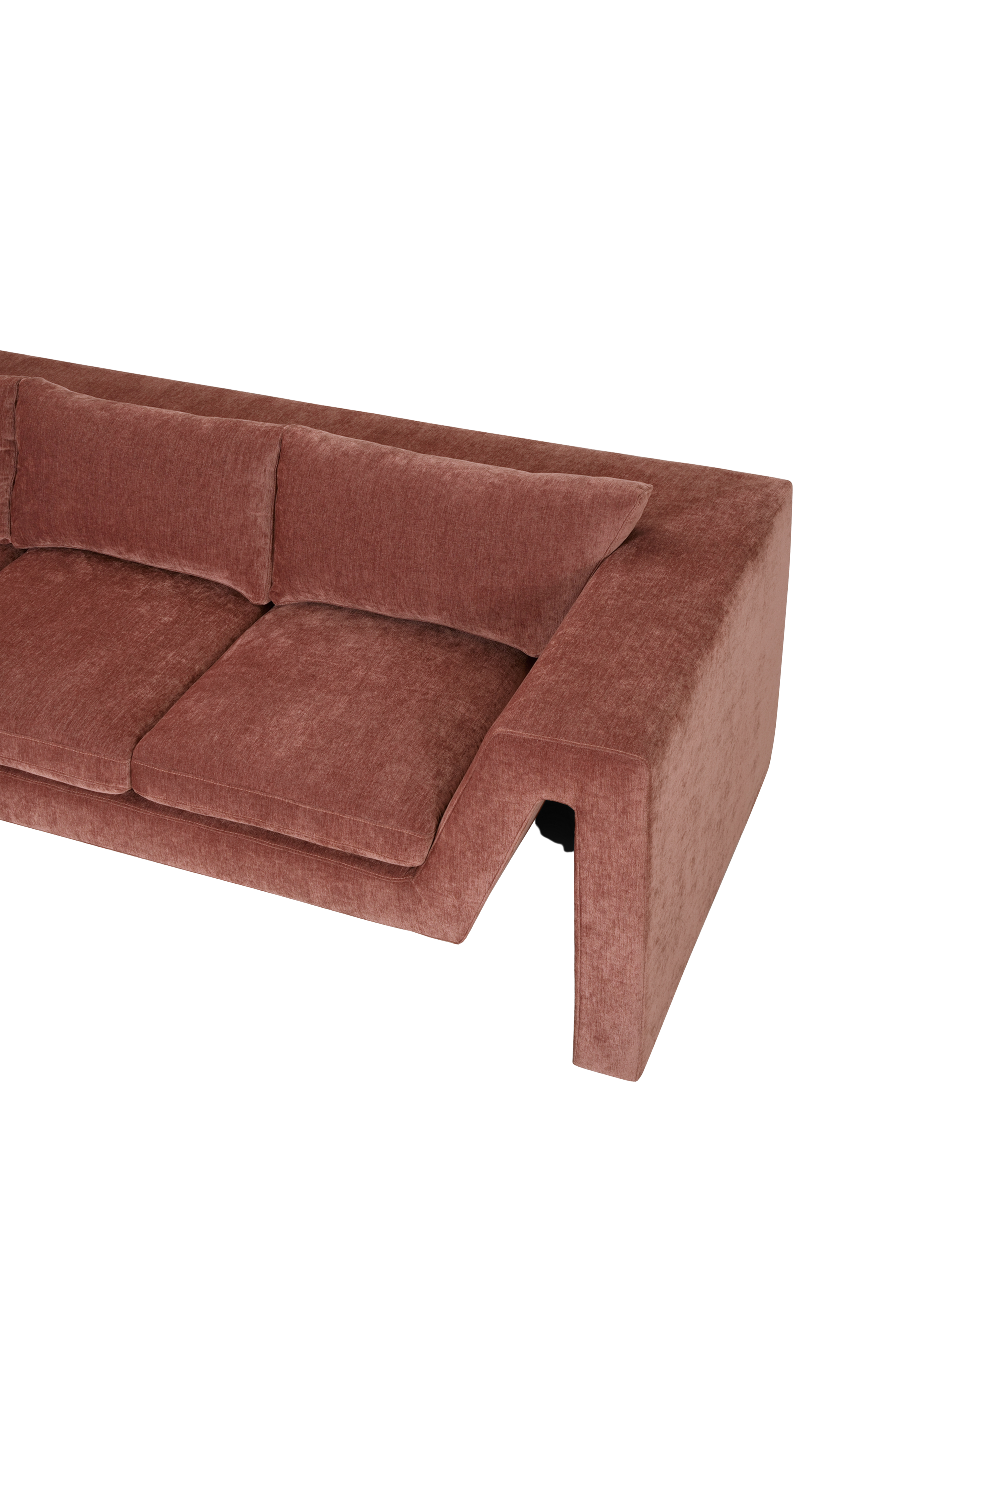 Angular Modern Sofa | Liang & Eimil Manu | Oroa.com